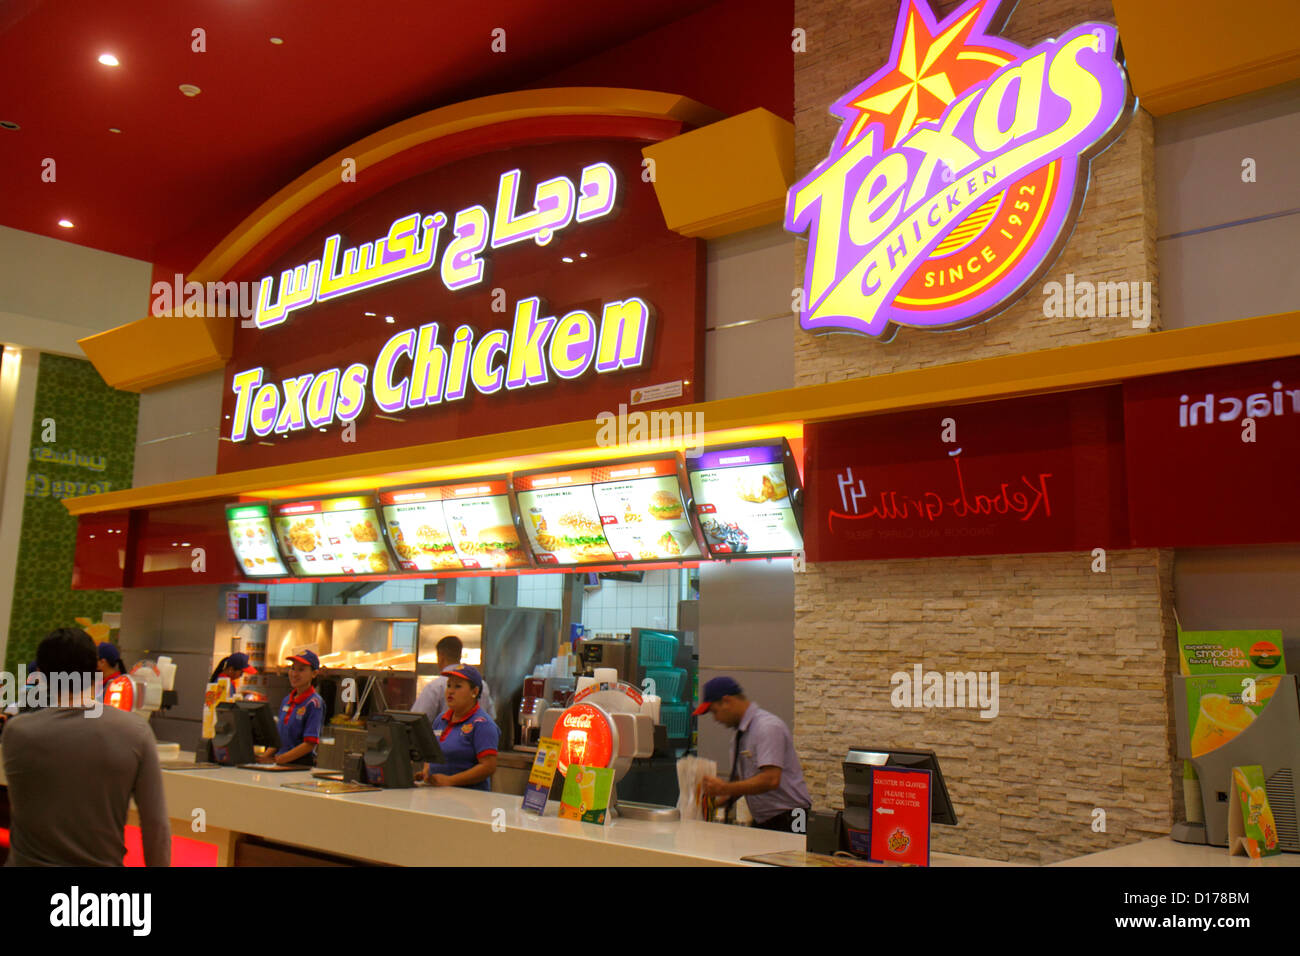 Dubai UAE,United Arab Emirates,Downtown Dubai,Dubai mall,food court plaza,Texas Chicken,fast food,restaurant restaurants food dining cafe cafes,Englis Stock Photo